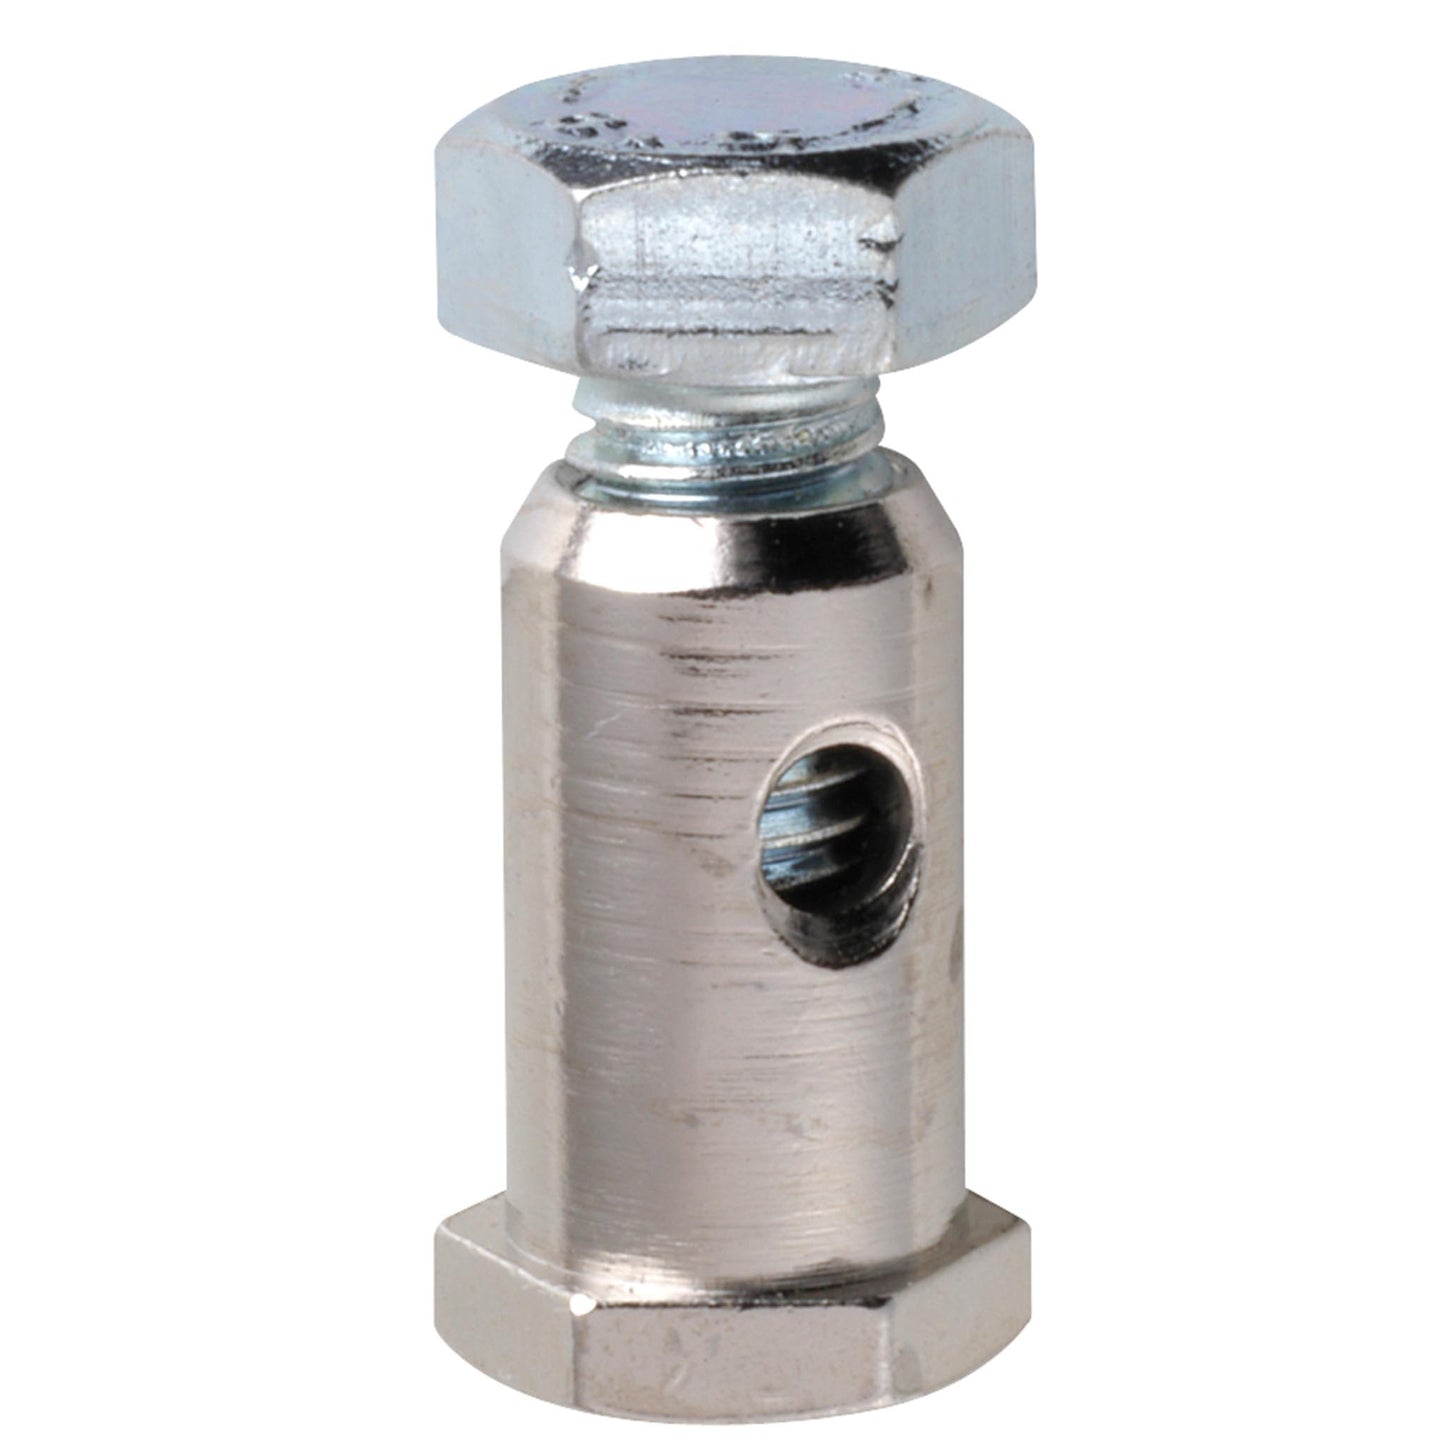 Screw nipple bore diameter 2.5 mm, shaft diameter 7 mm, nickel-plated brass